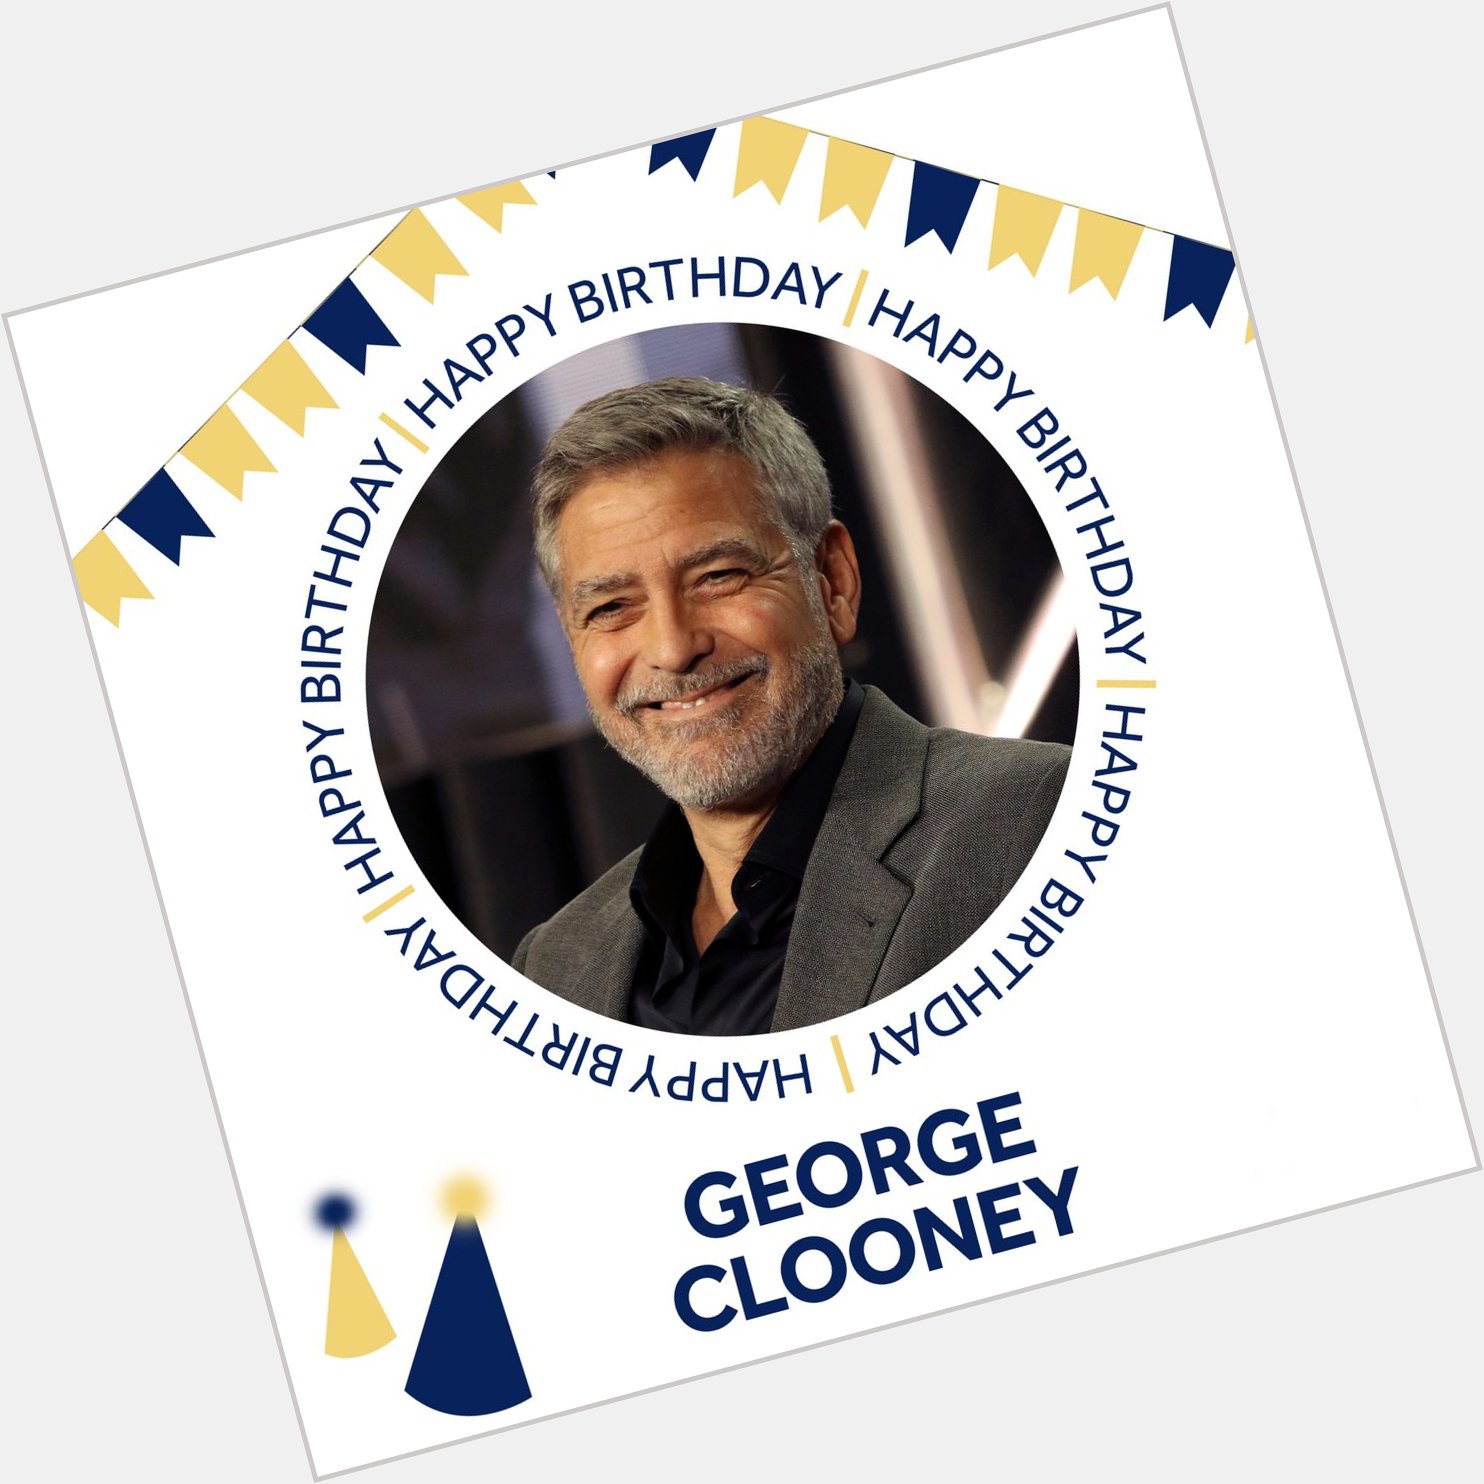 Happy 61st birthday to George Clooney! 